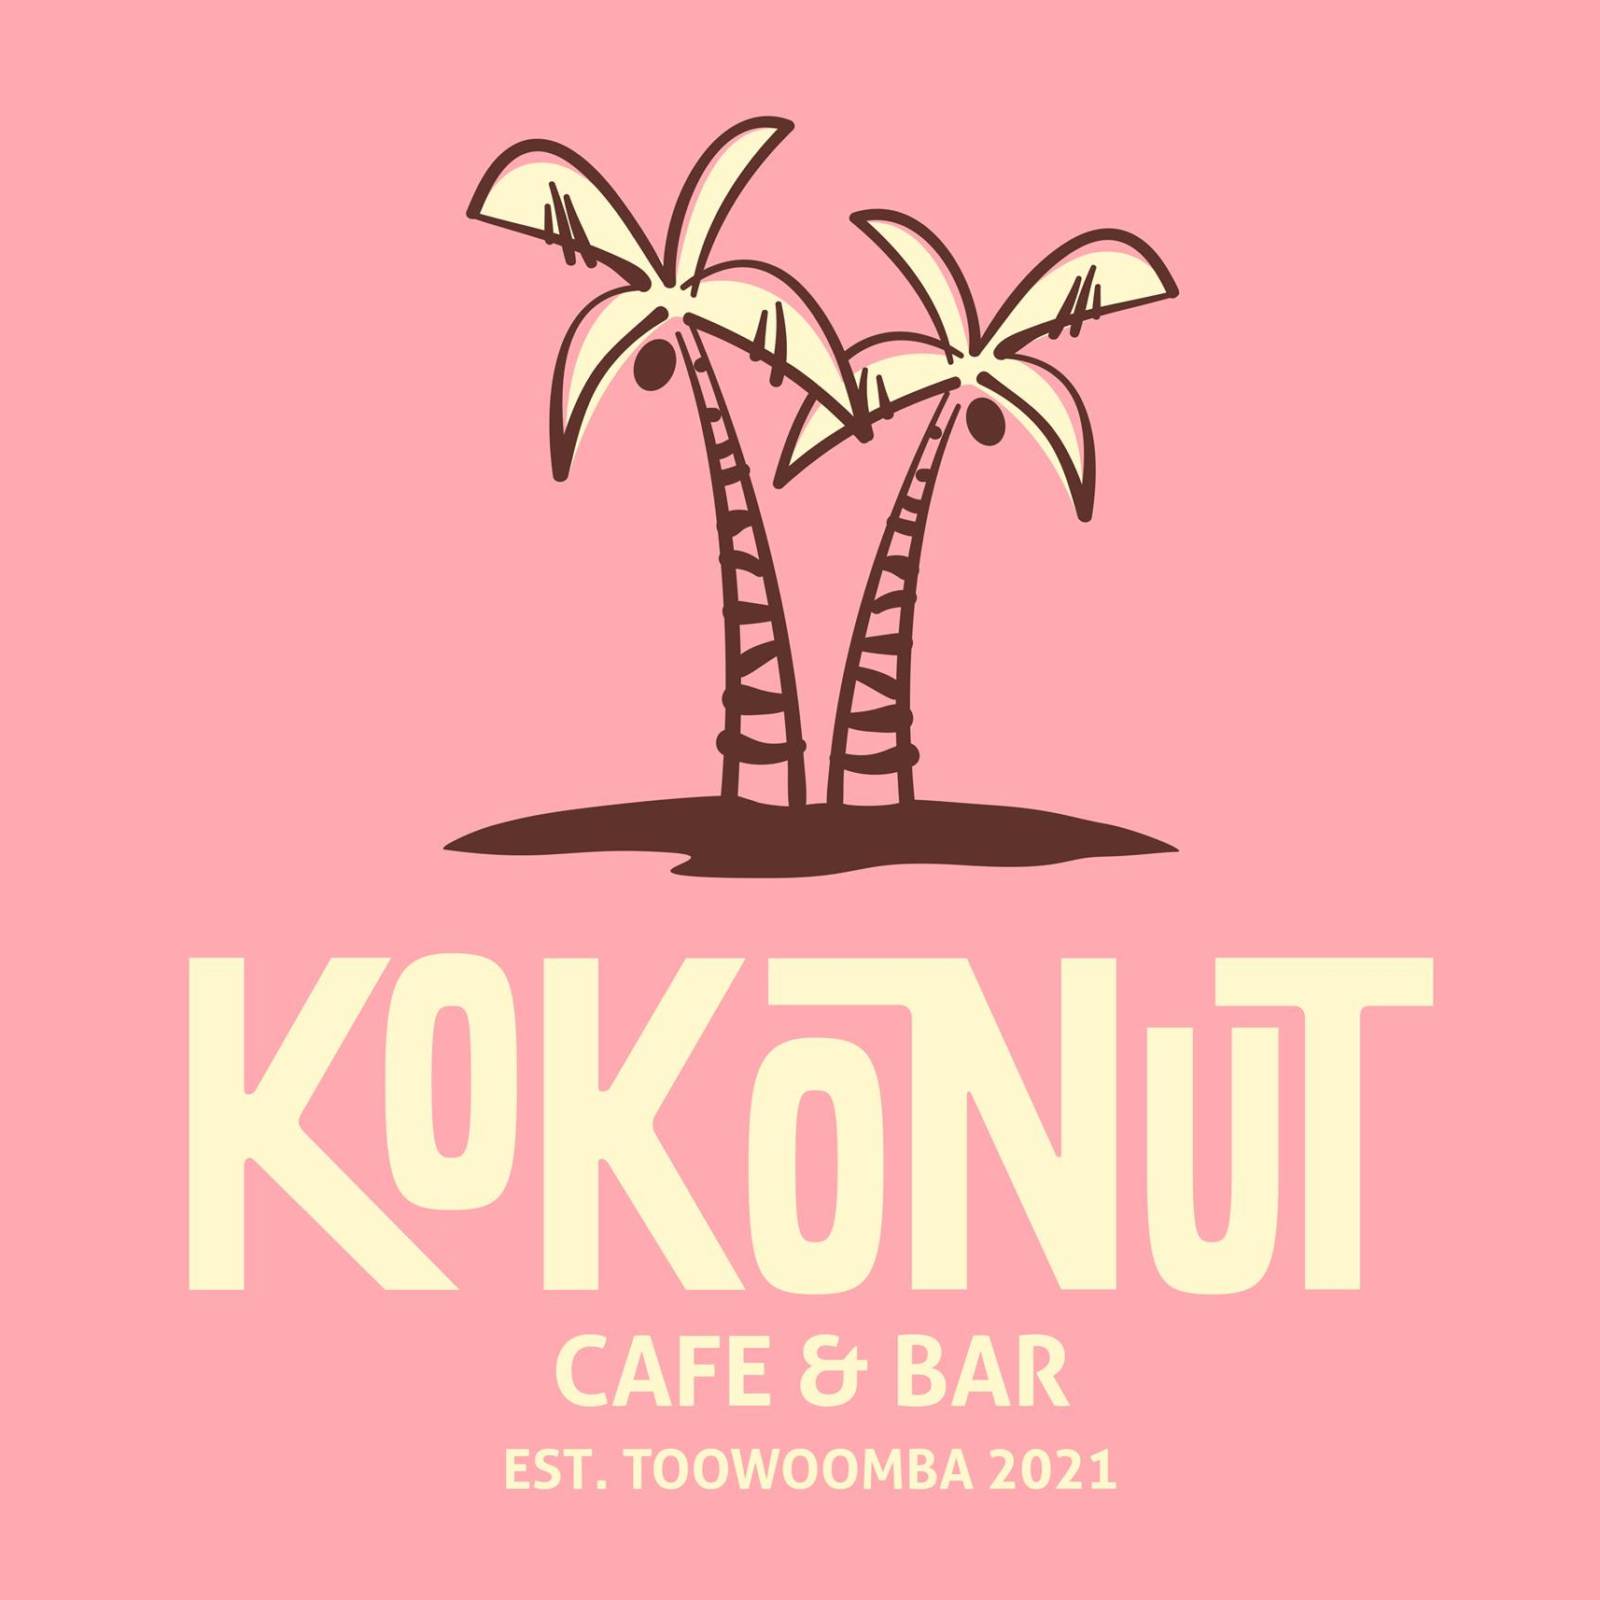 Kokonut Cafe